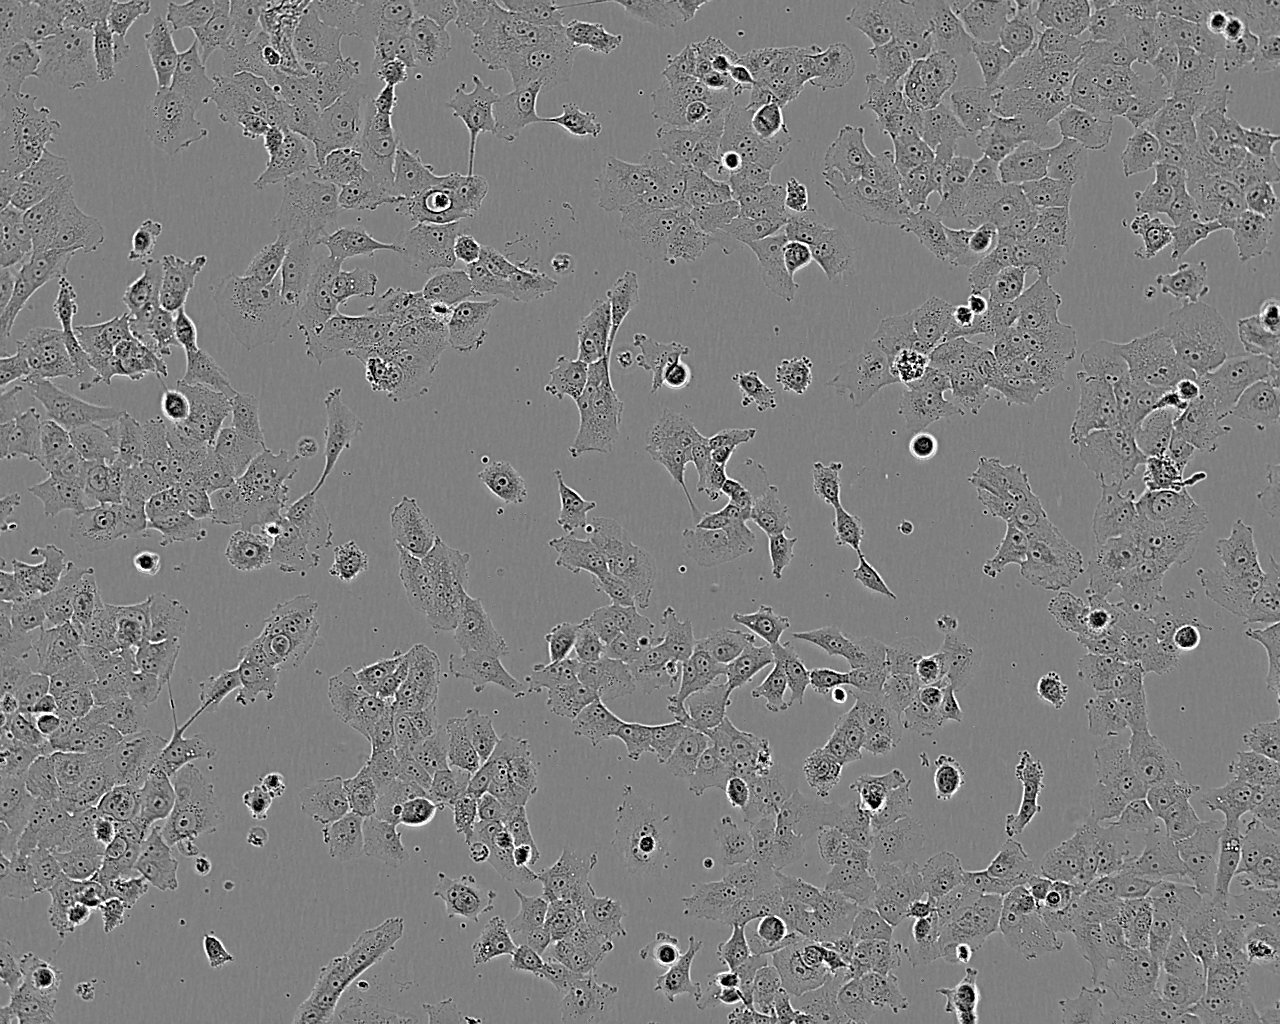 MDA-MB-436 epithelioid cells人乳腺癌细胞系